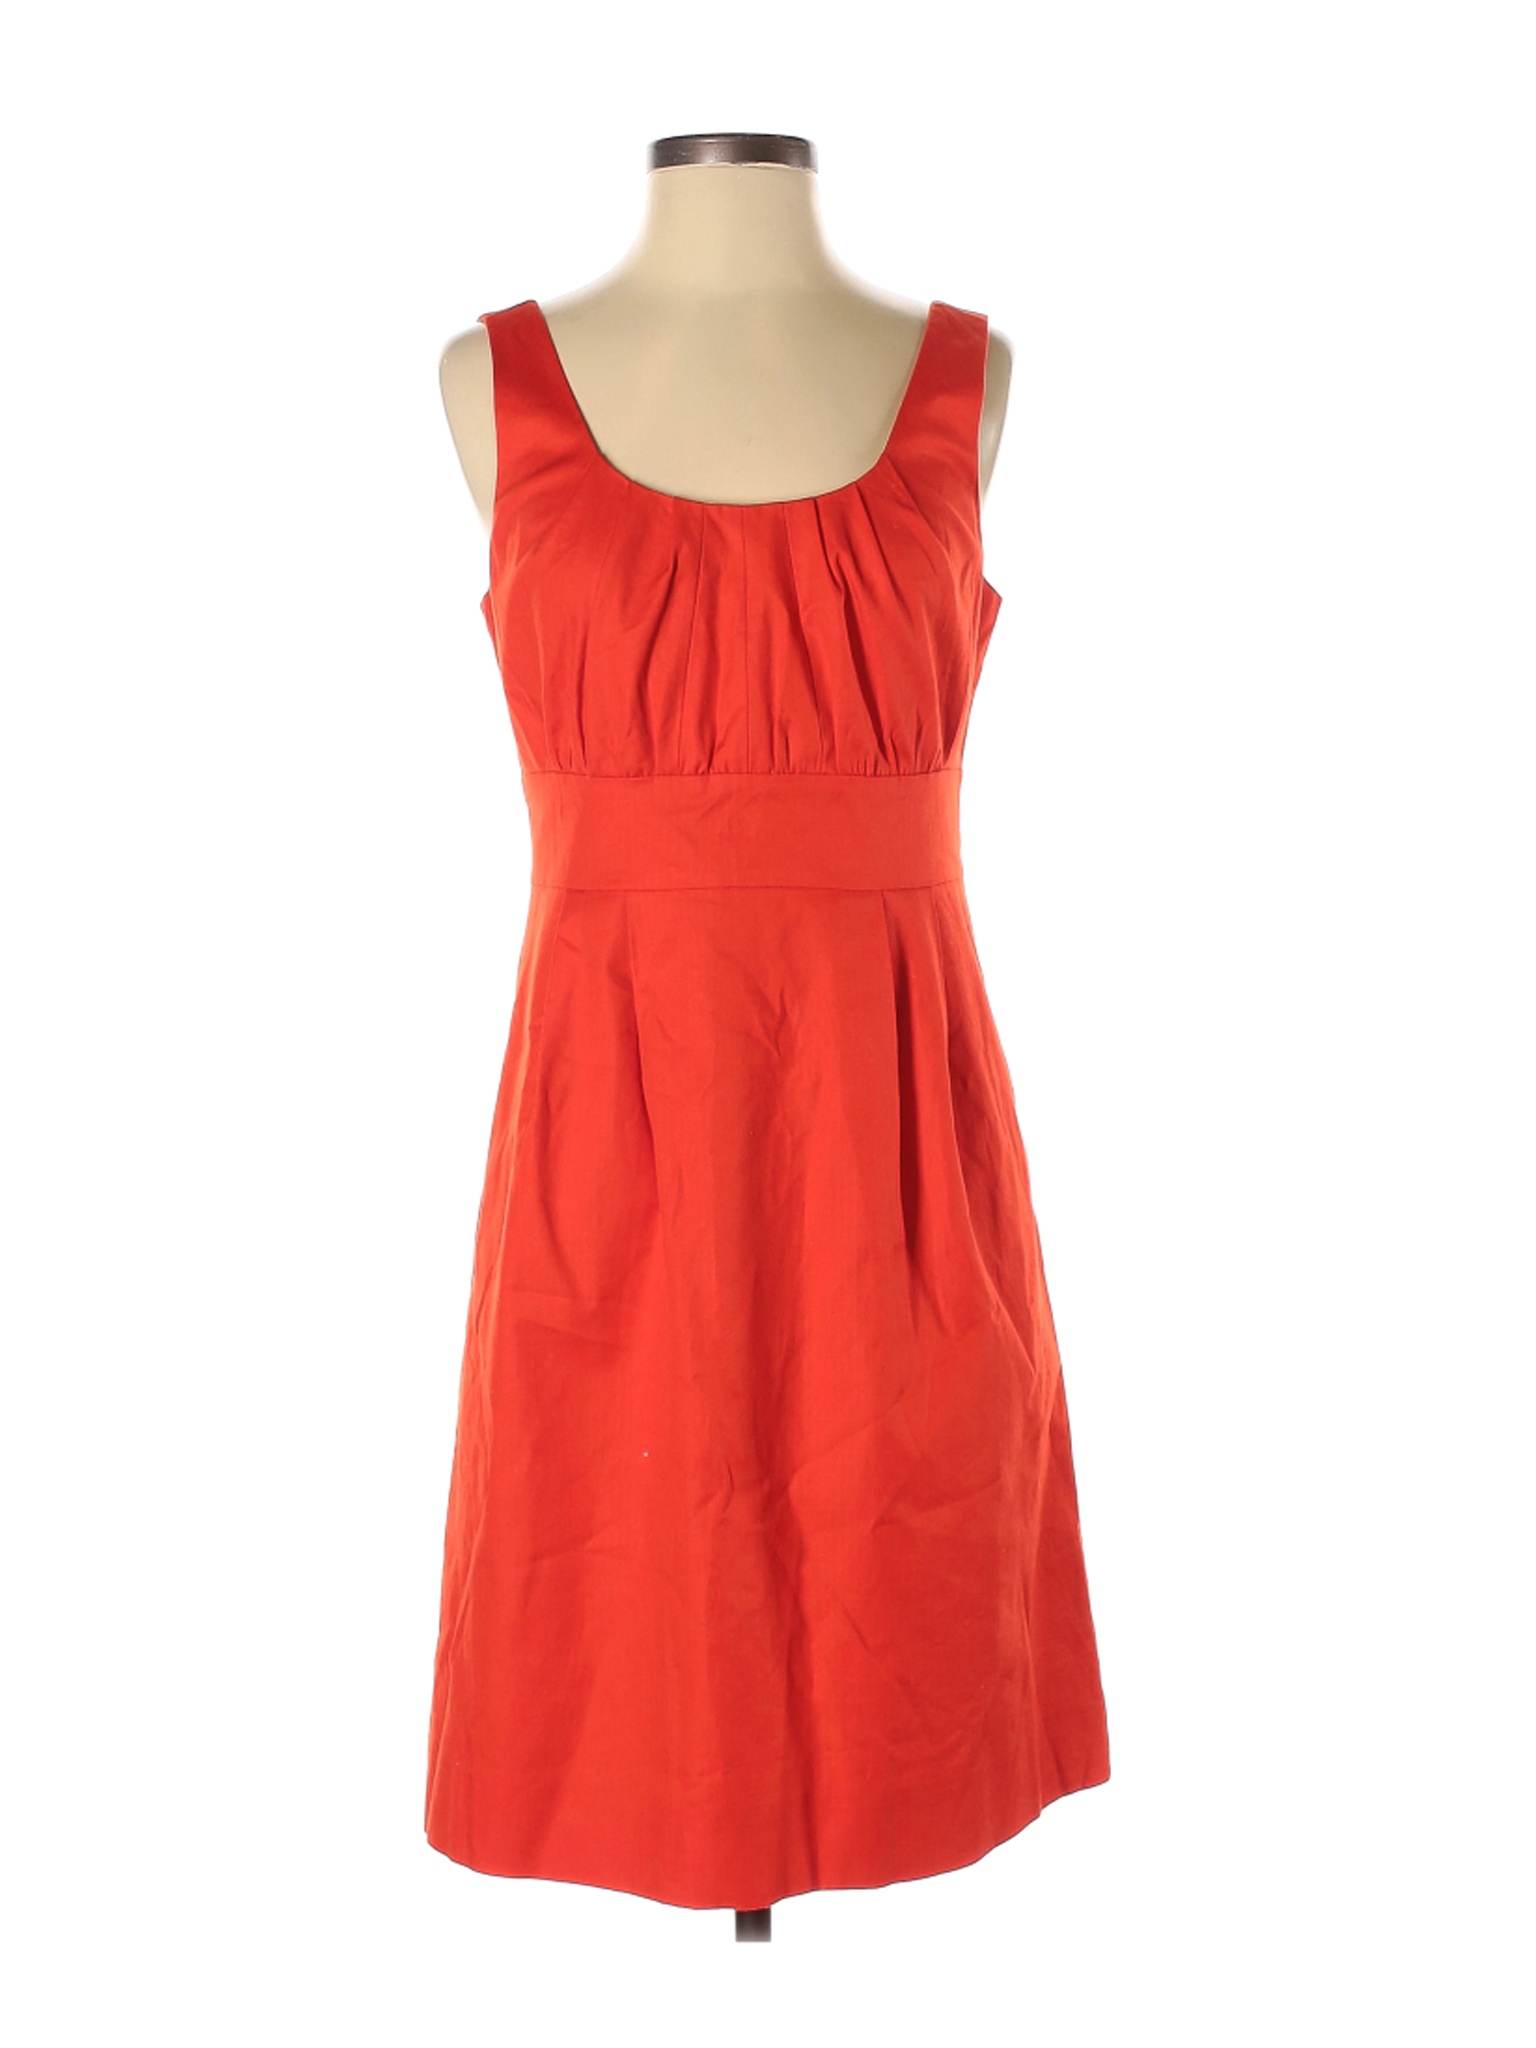 J.Crew Women Orange Casual Dress 8 | eBay